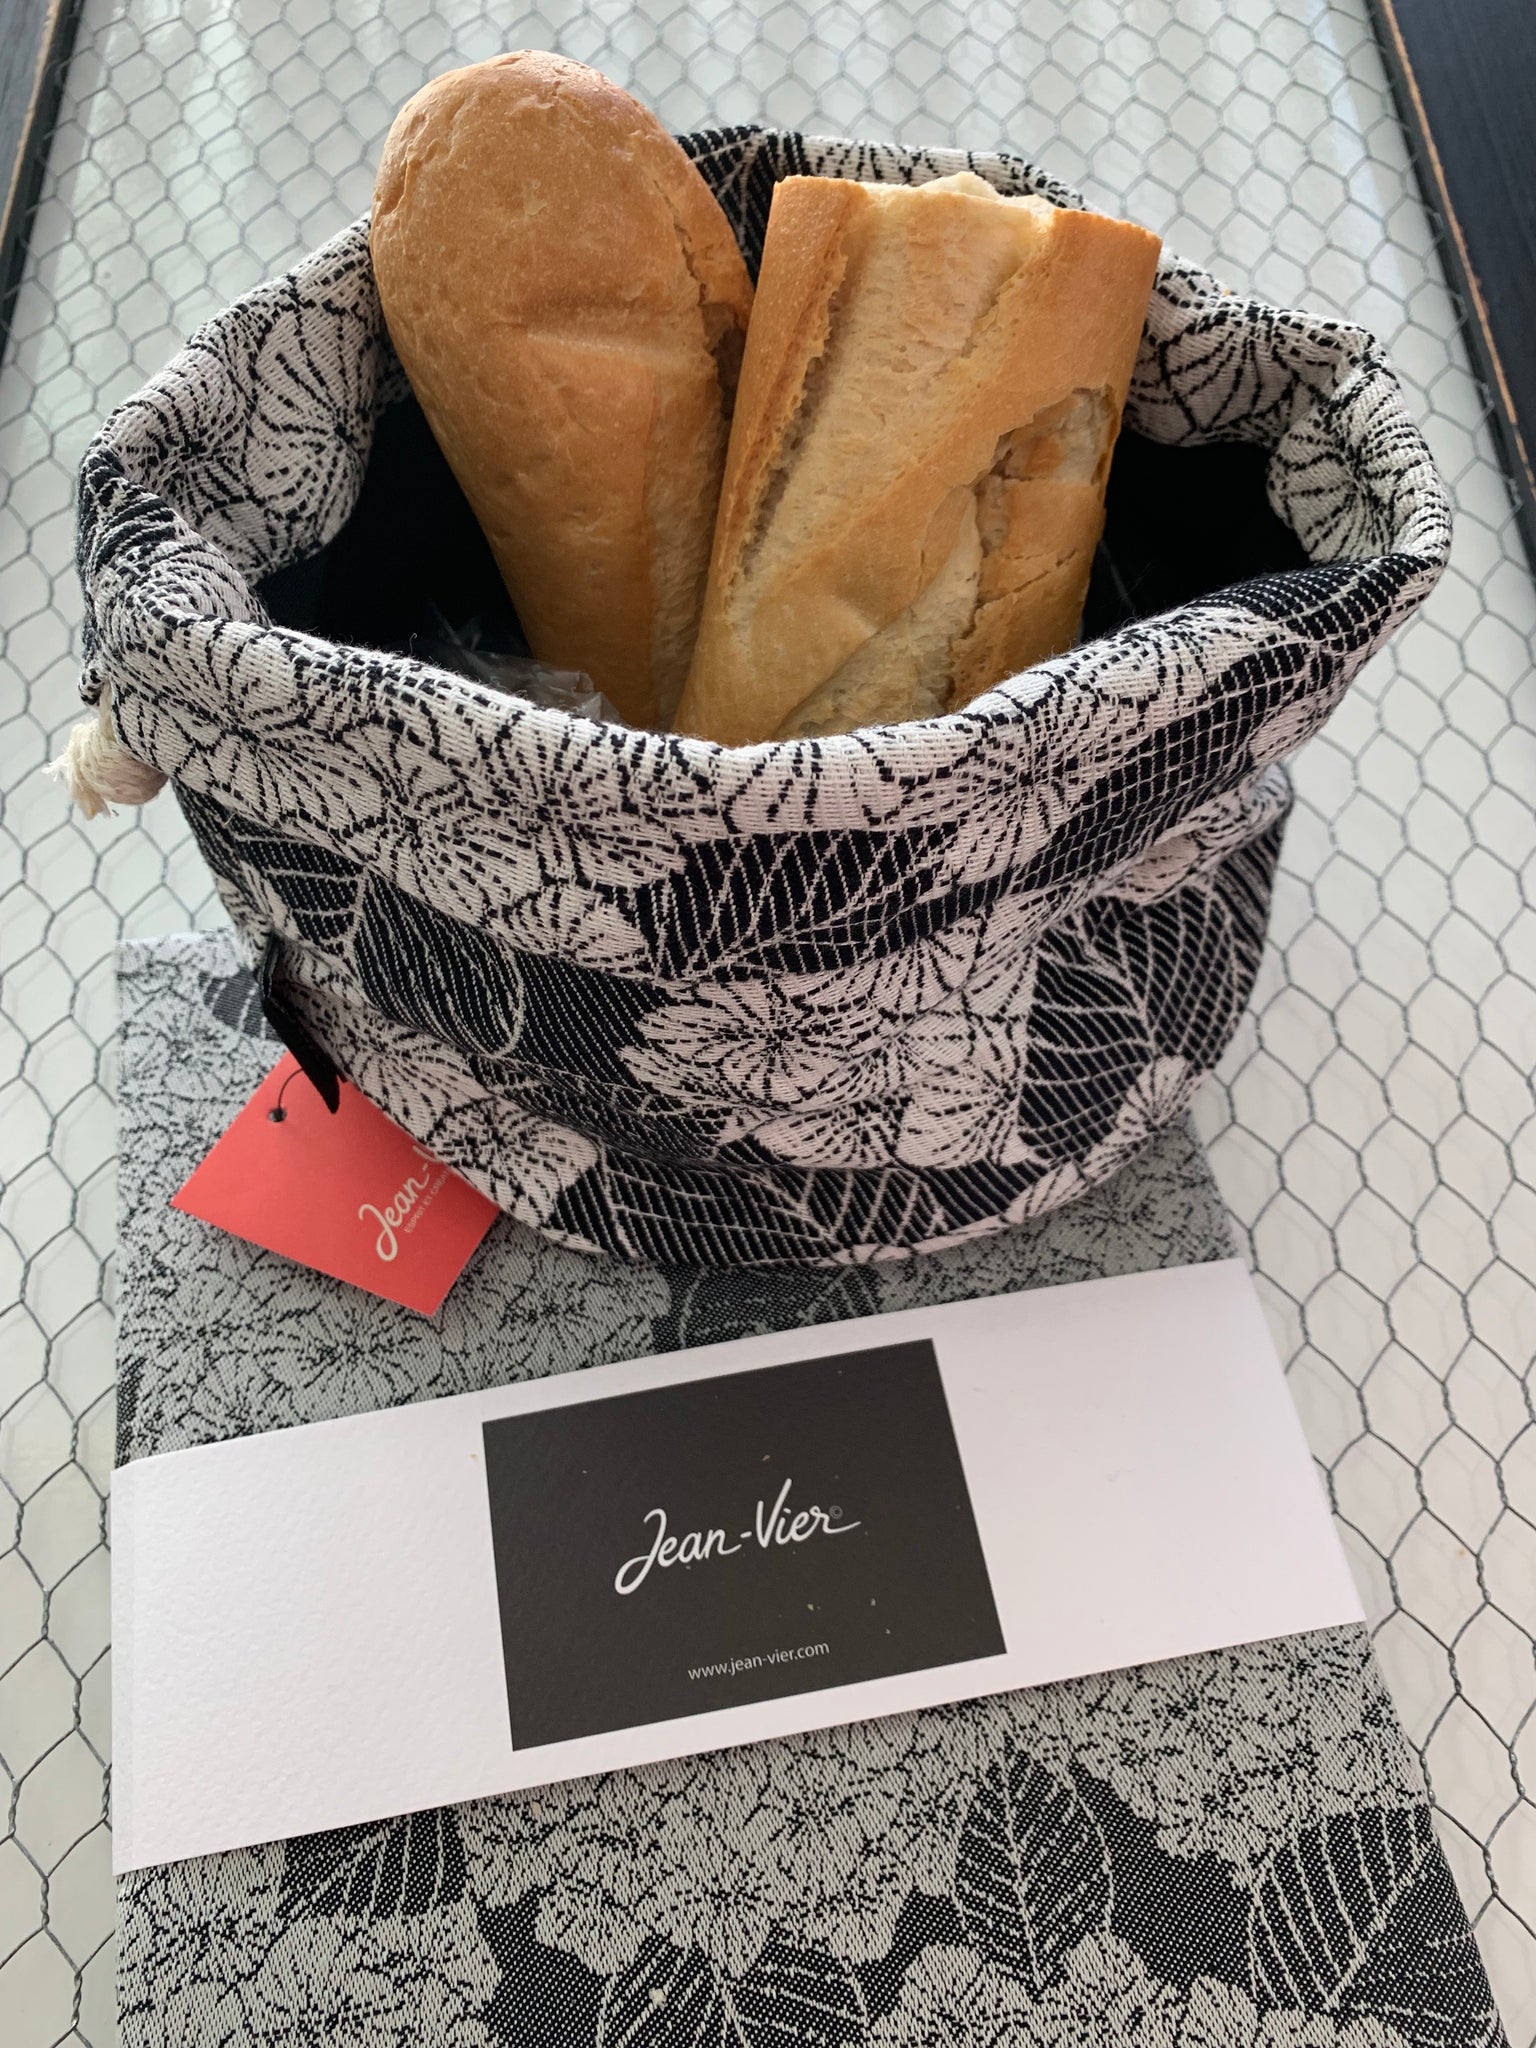 French bread basket "Hortensia" by Jean-Vier